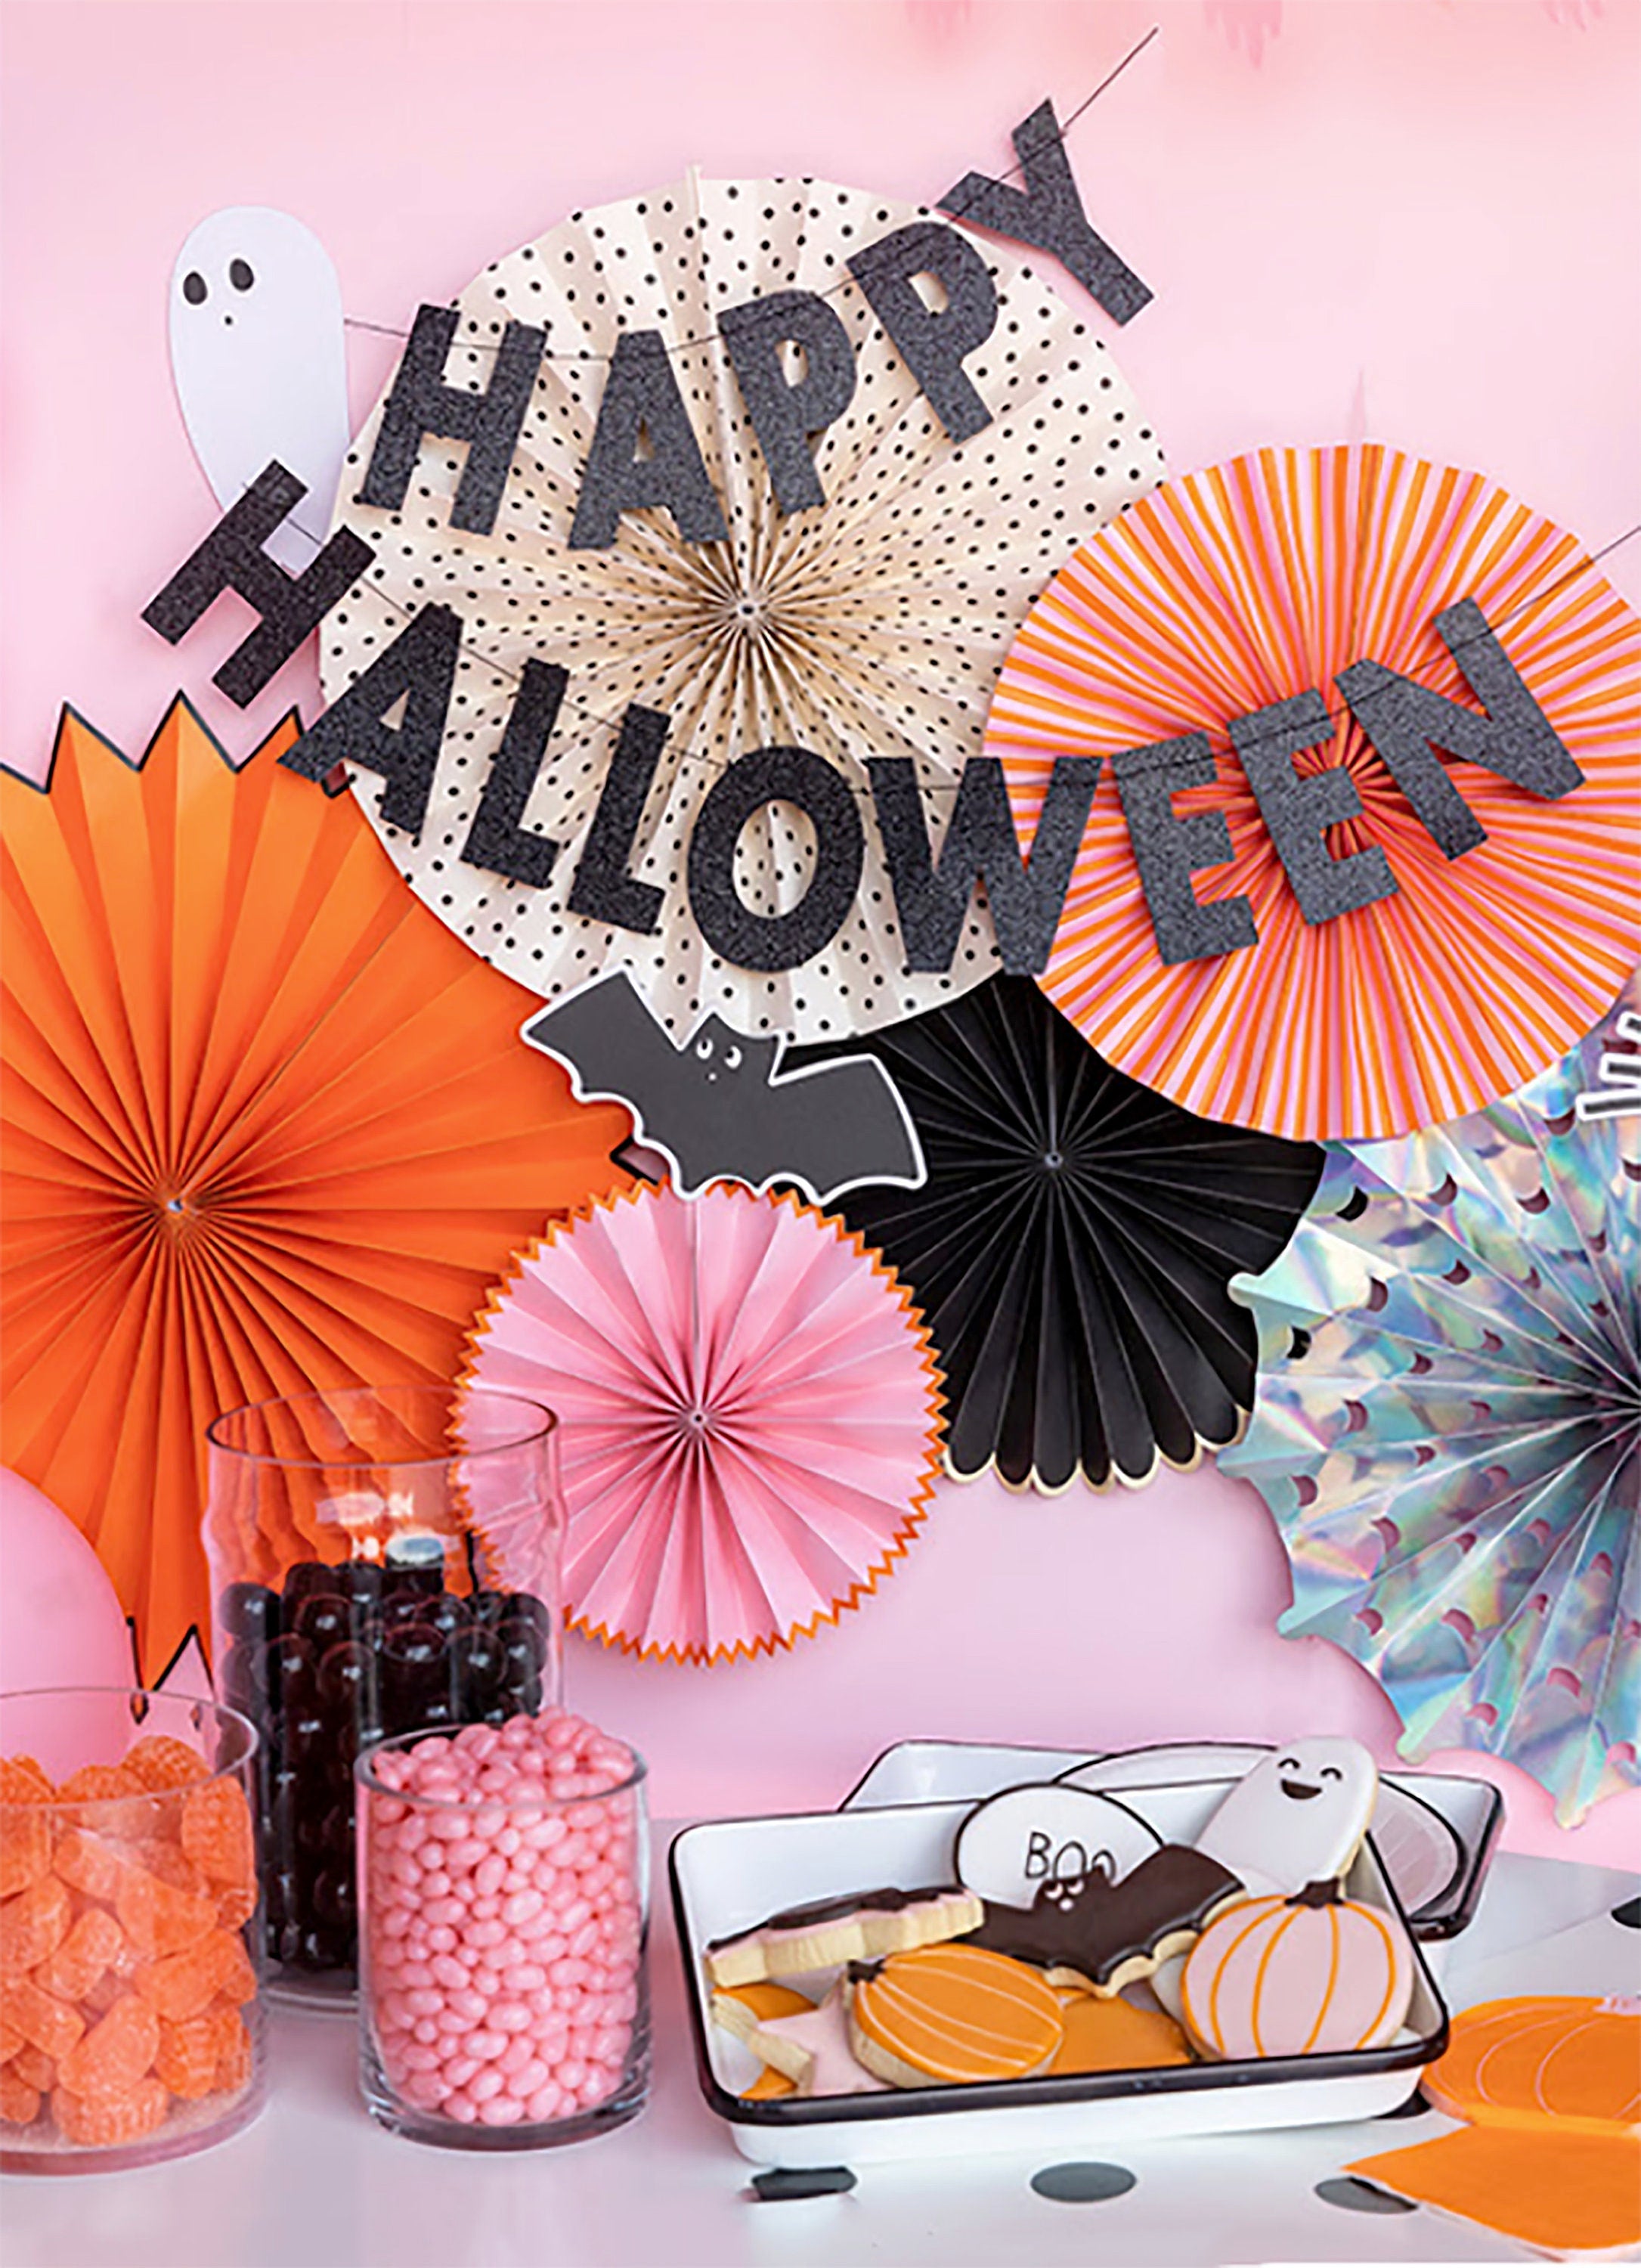 Happy Halloween Banner | Halloween Mantel Decor - Halloween Home Decor - Halloween Banner - Halloween Party Supplies - Halloween Decorations